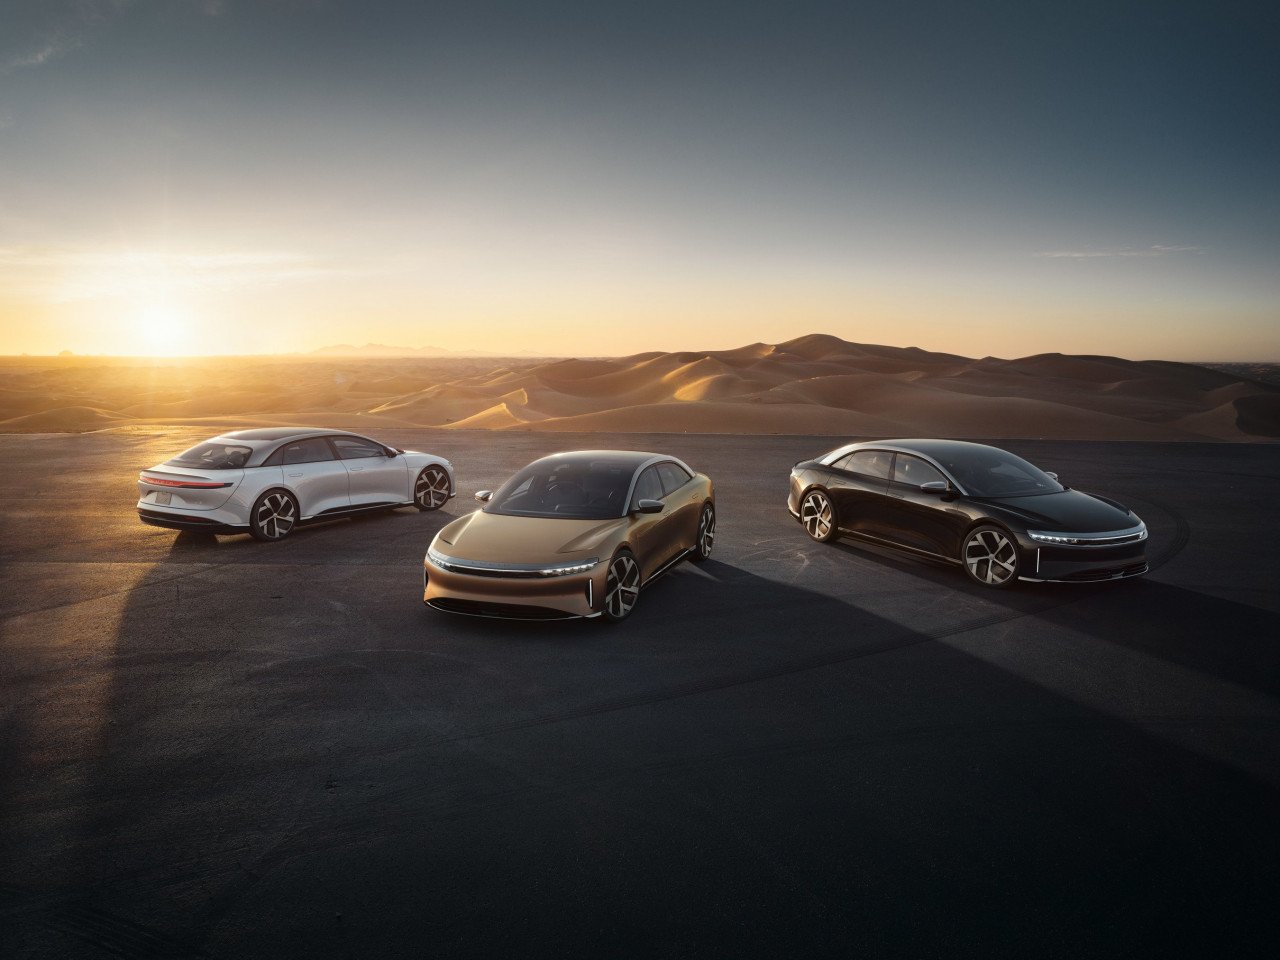 Tesla rival Lucid raises $3 billion amid falling sales -